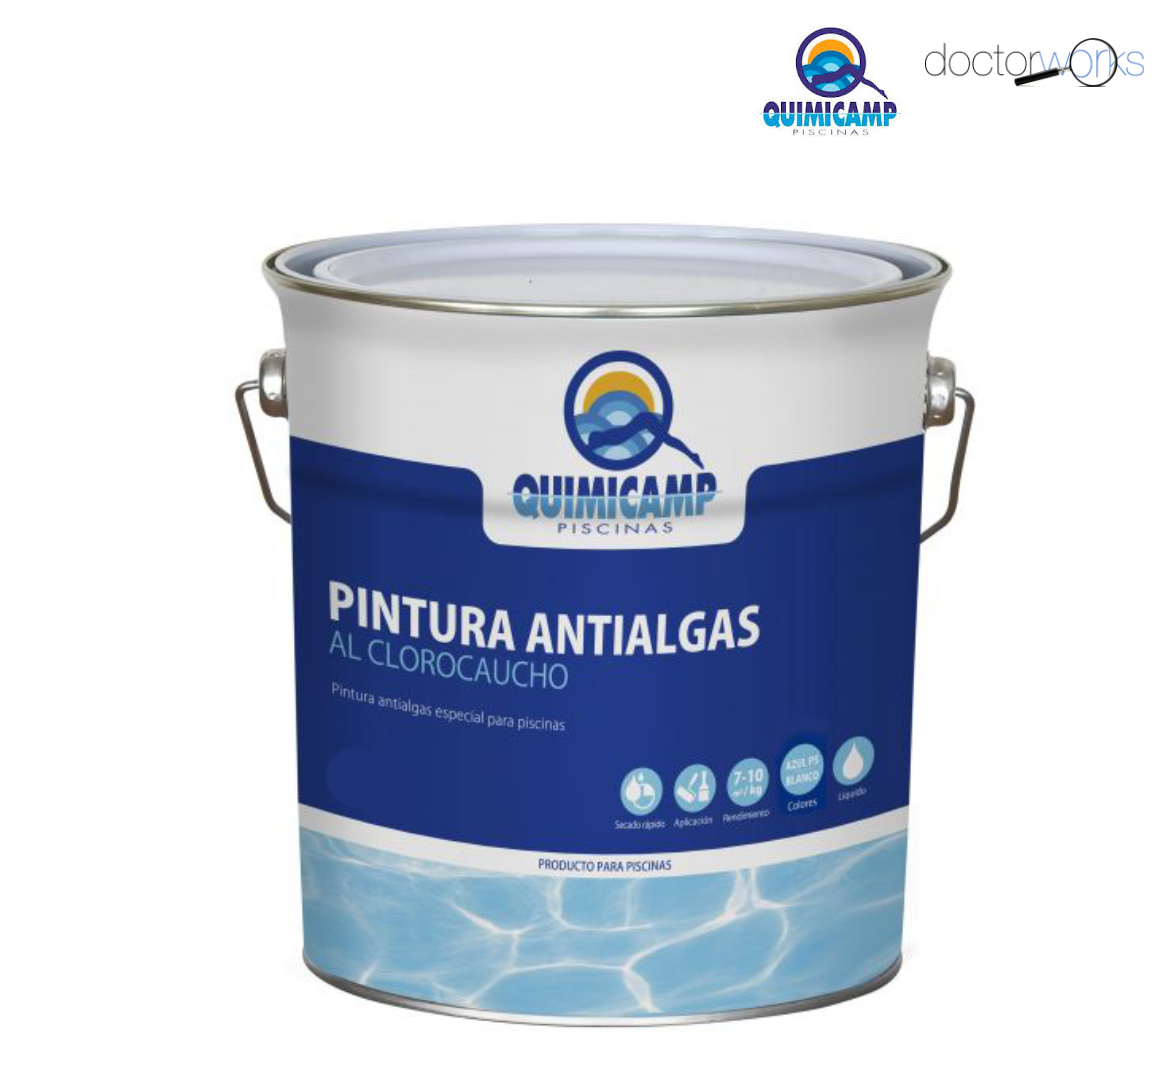 Pintura piscinas antialgas al clorocaucho Quimicamp Azul. Bidón de 25 litros